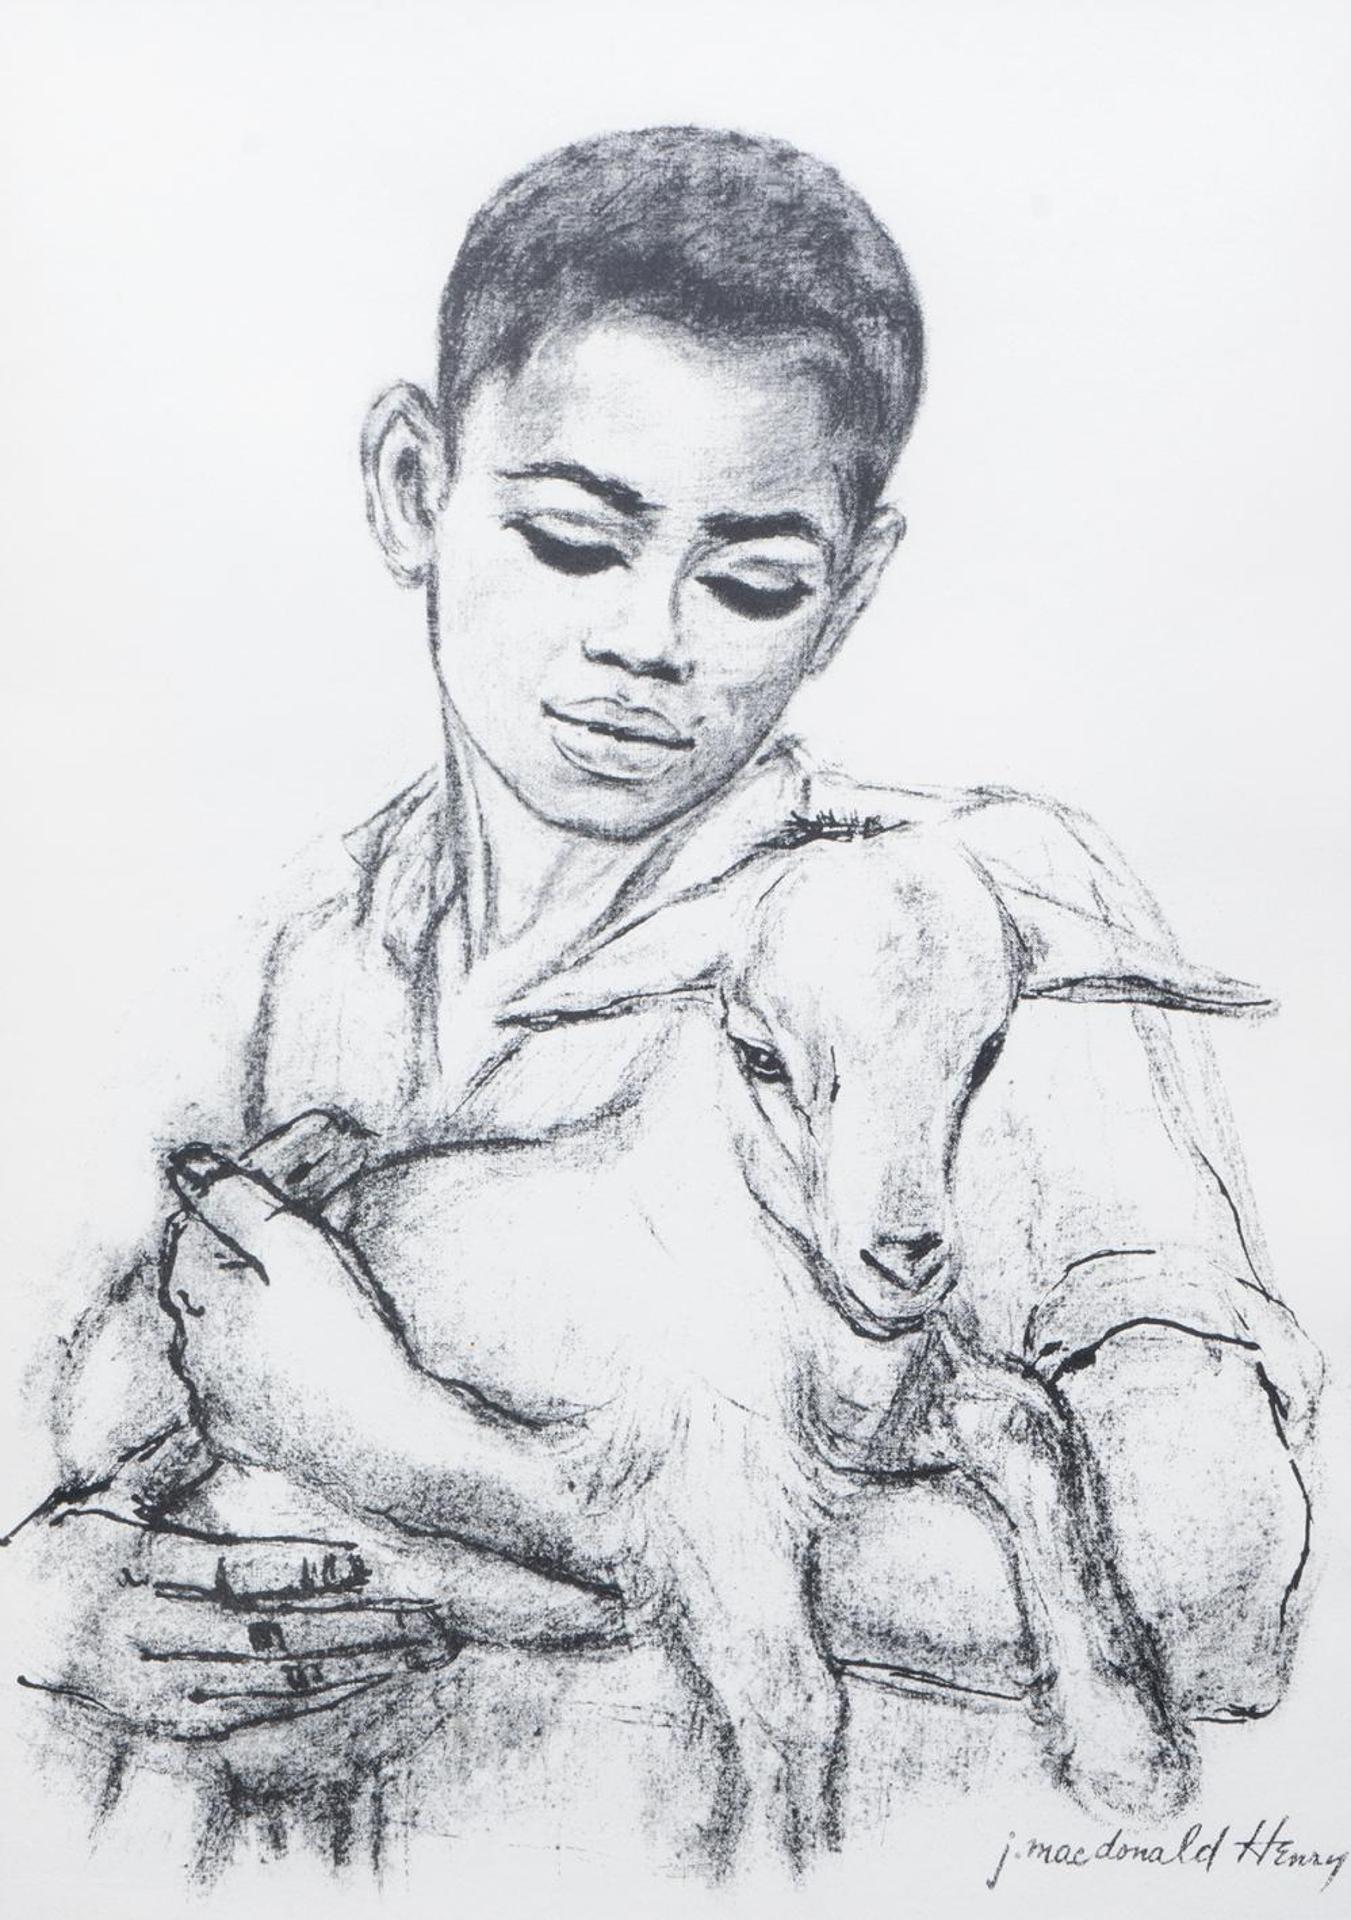 J. MacDonald Henry - Untitled - Boy With Goat